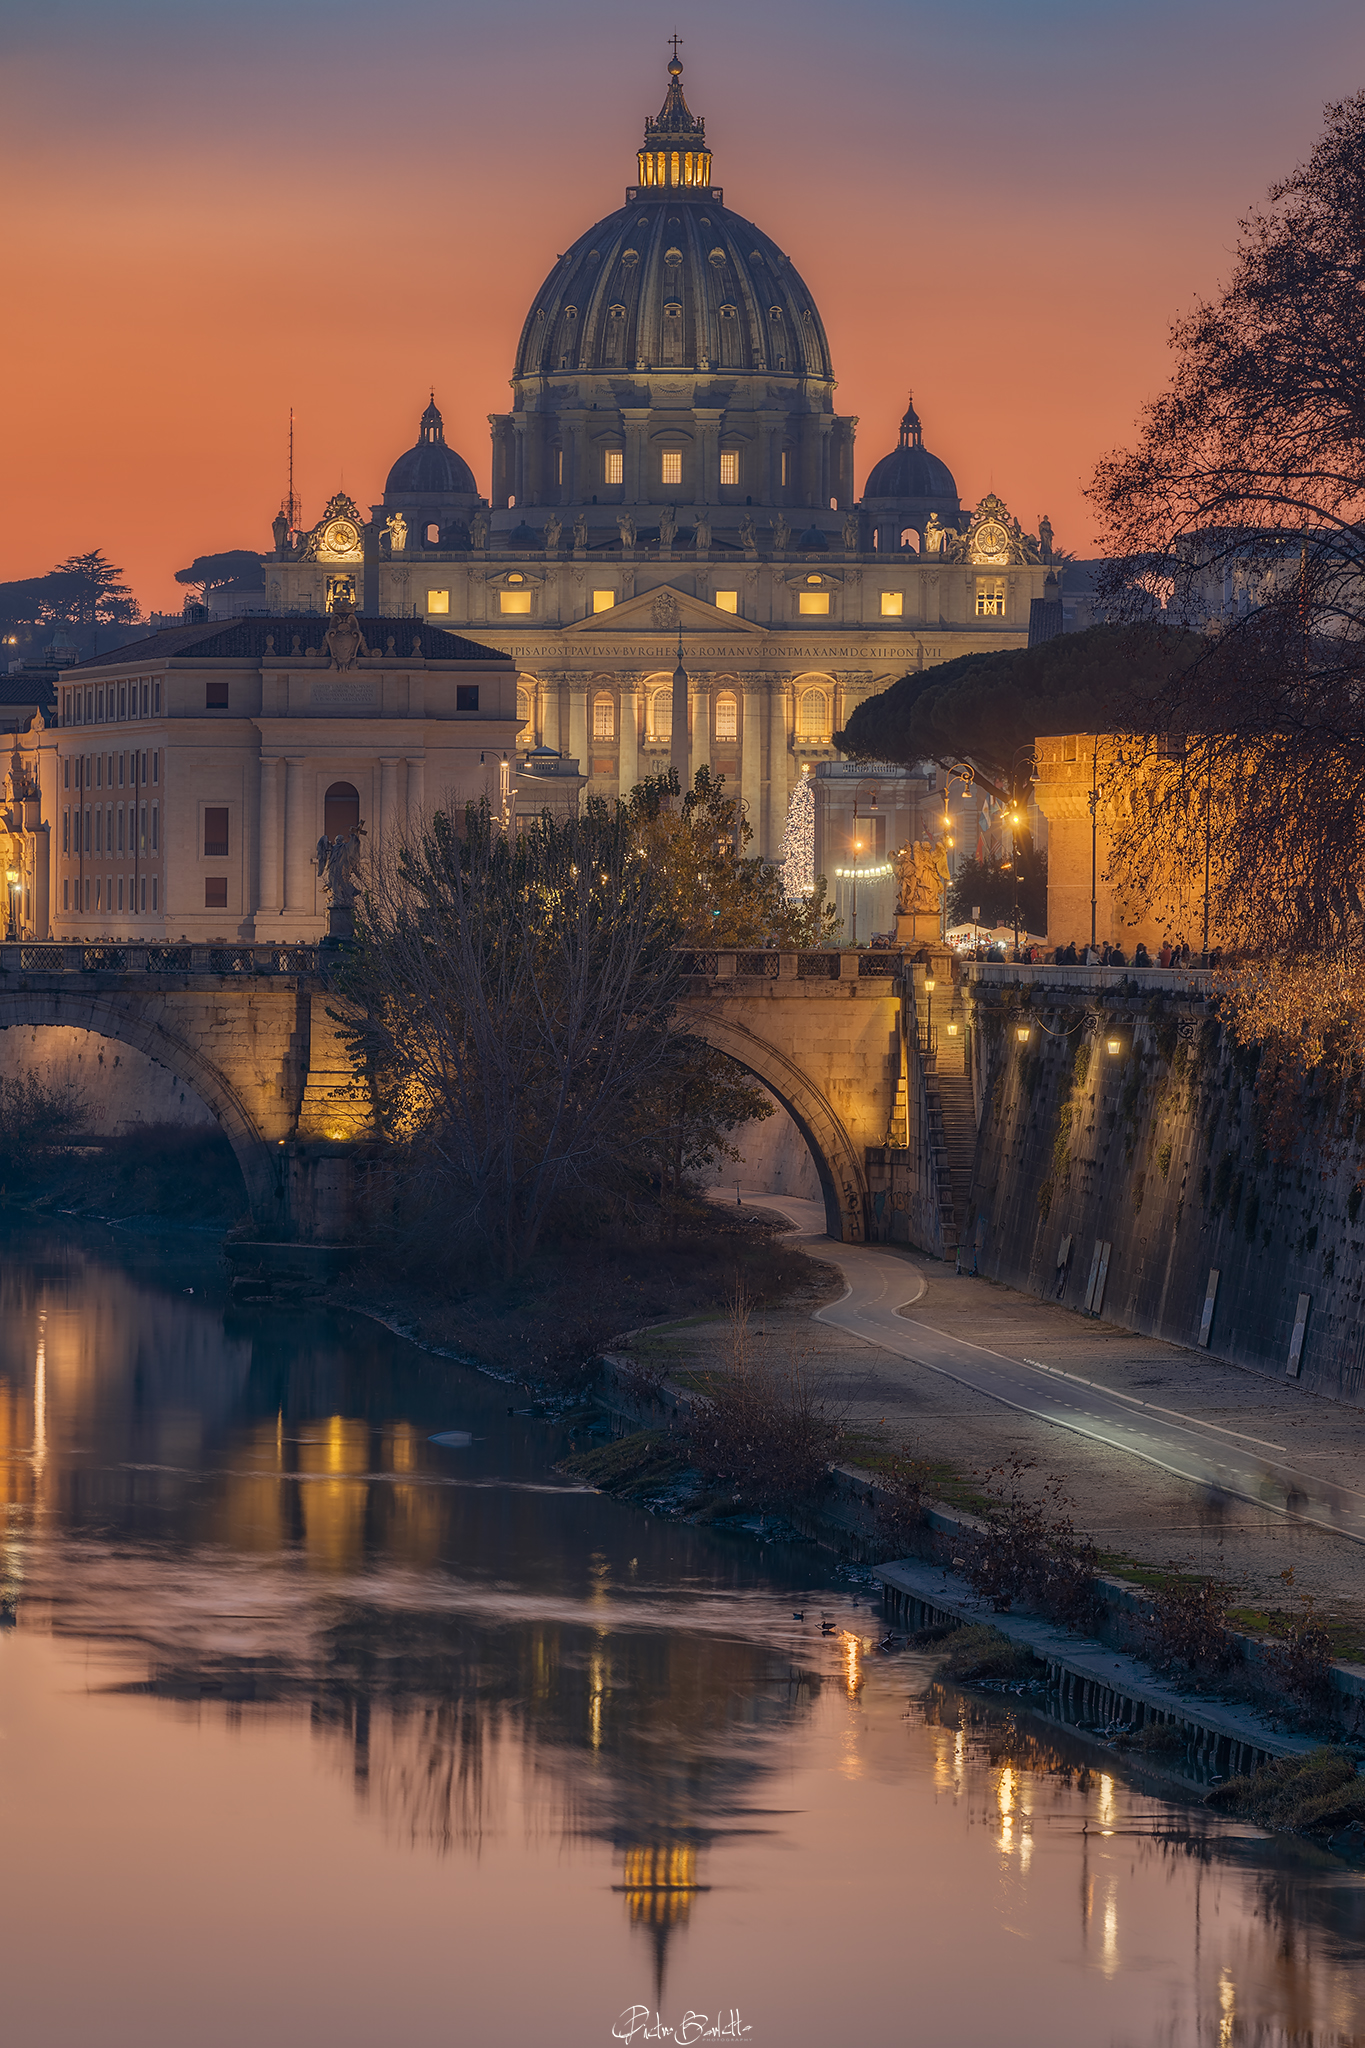 Rome, the eternal city...